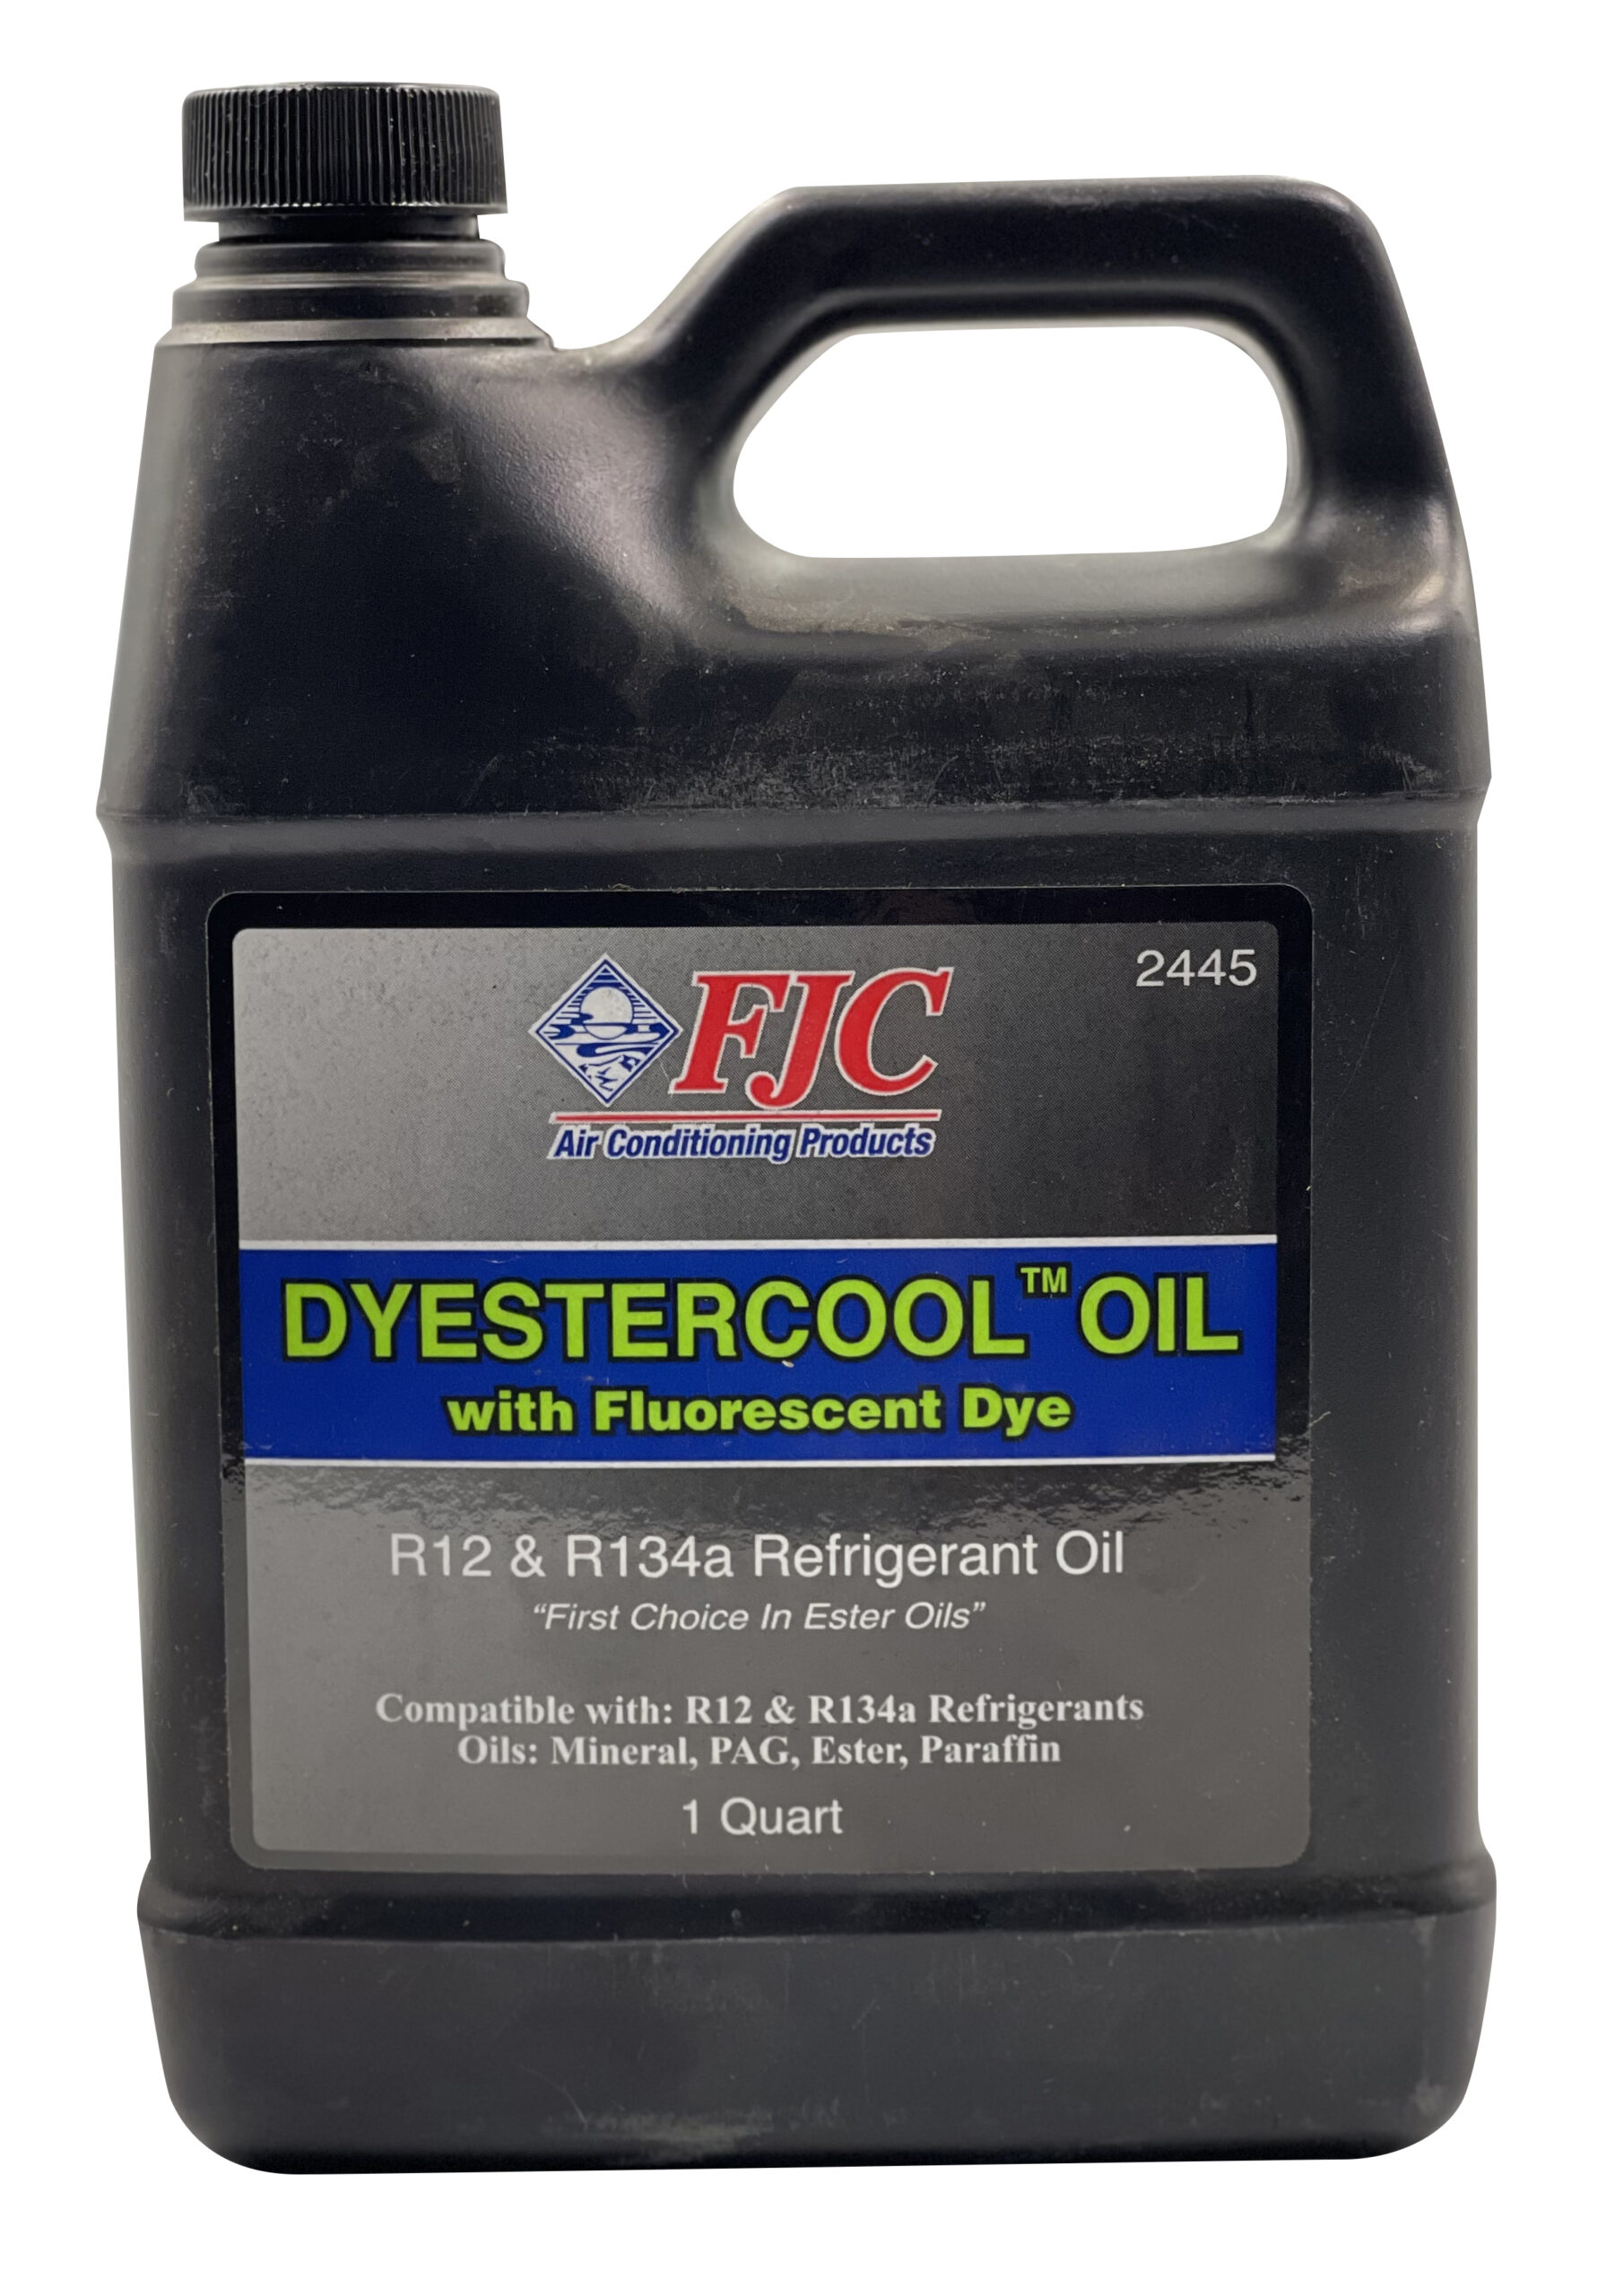 2445 FJC DyEstercool Oil Quart